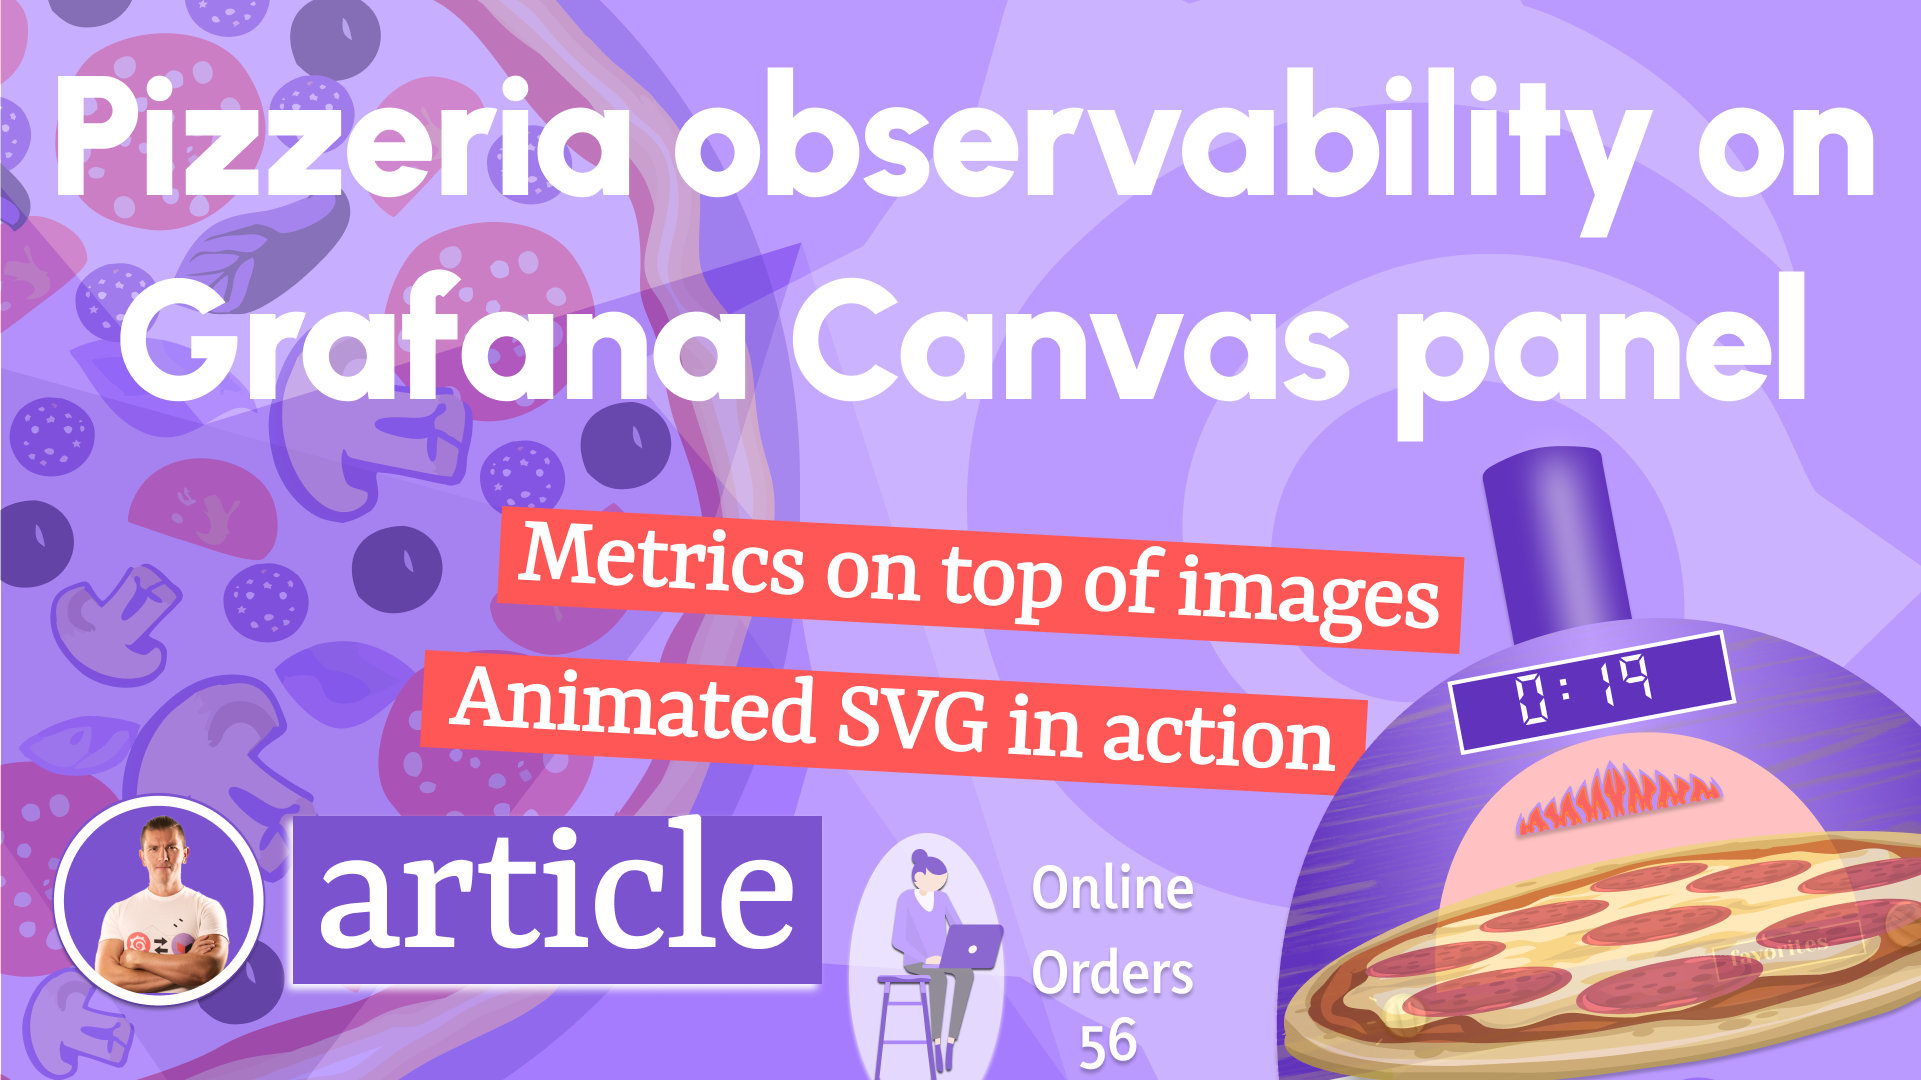 Pizzeria observability on Grafana Canvas panel